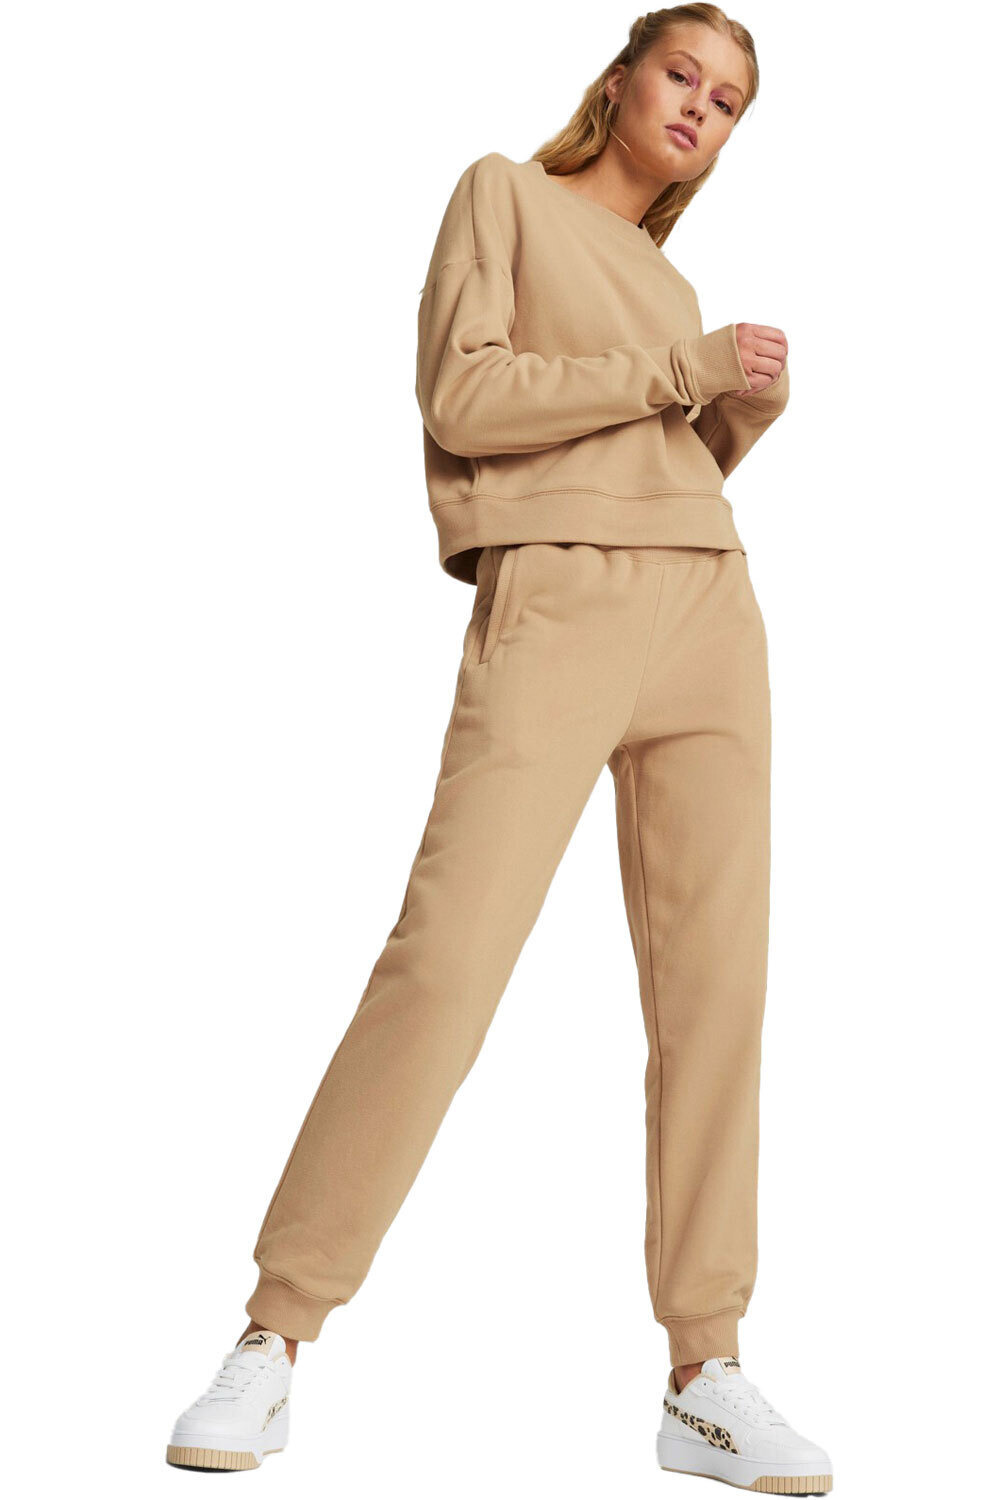 Puma chándal mujer Loungewear Suit TR vista frontal